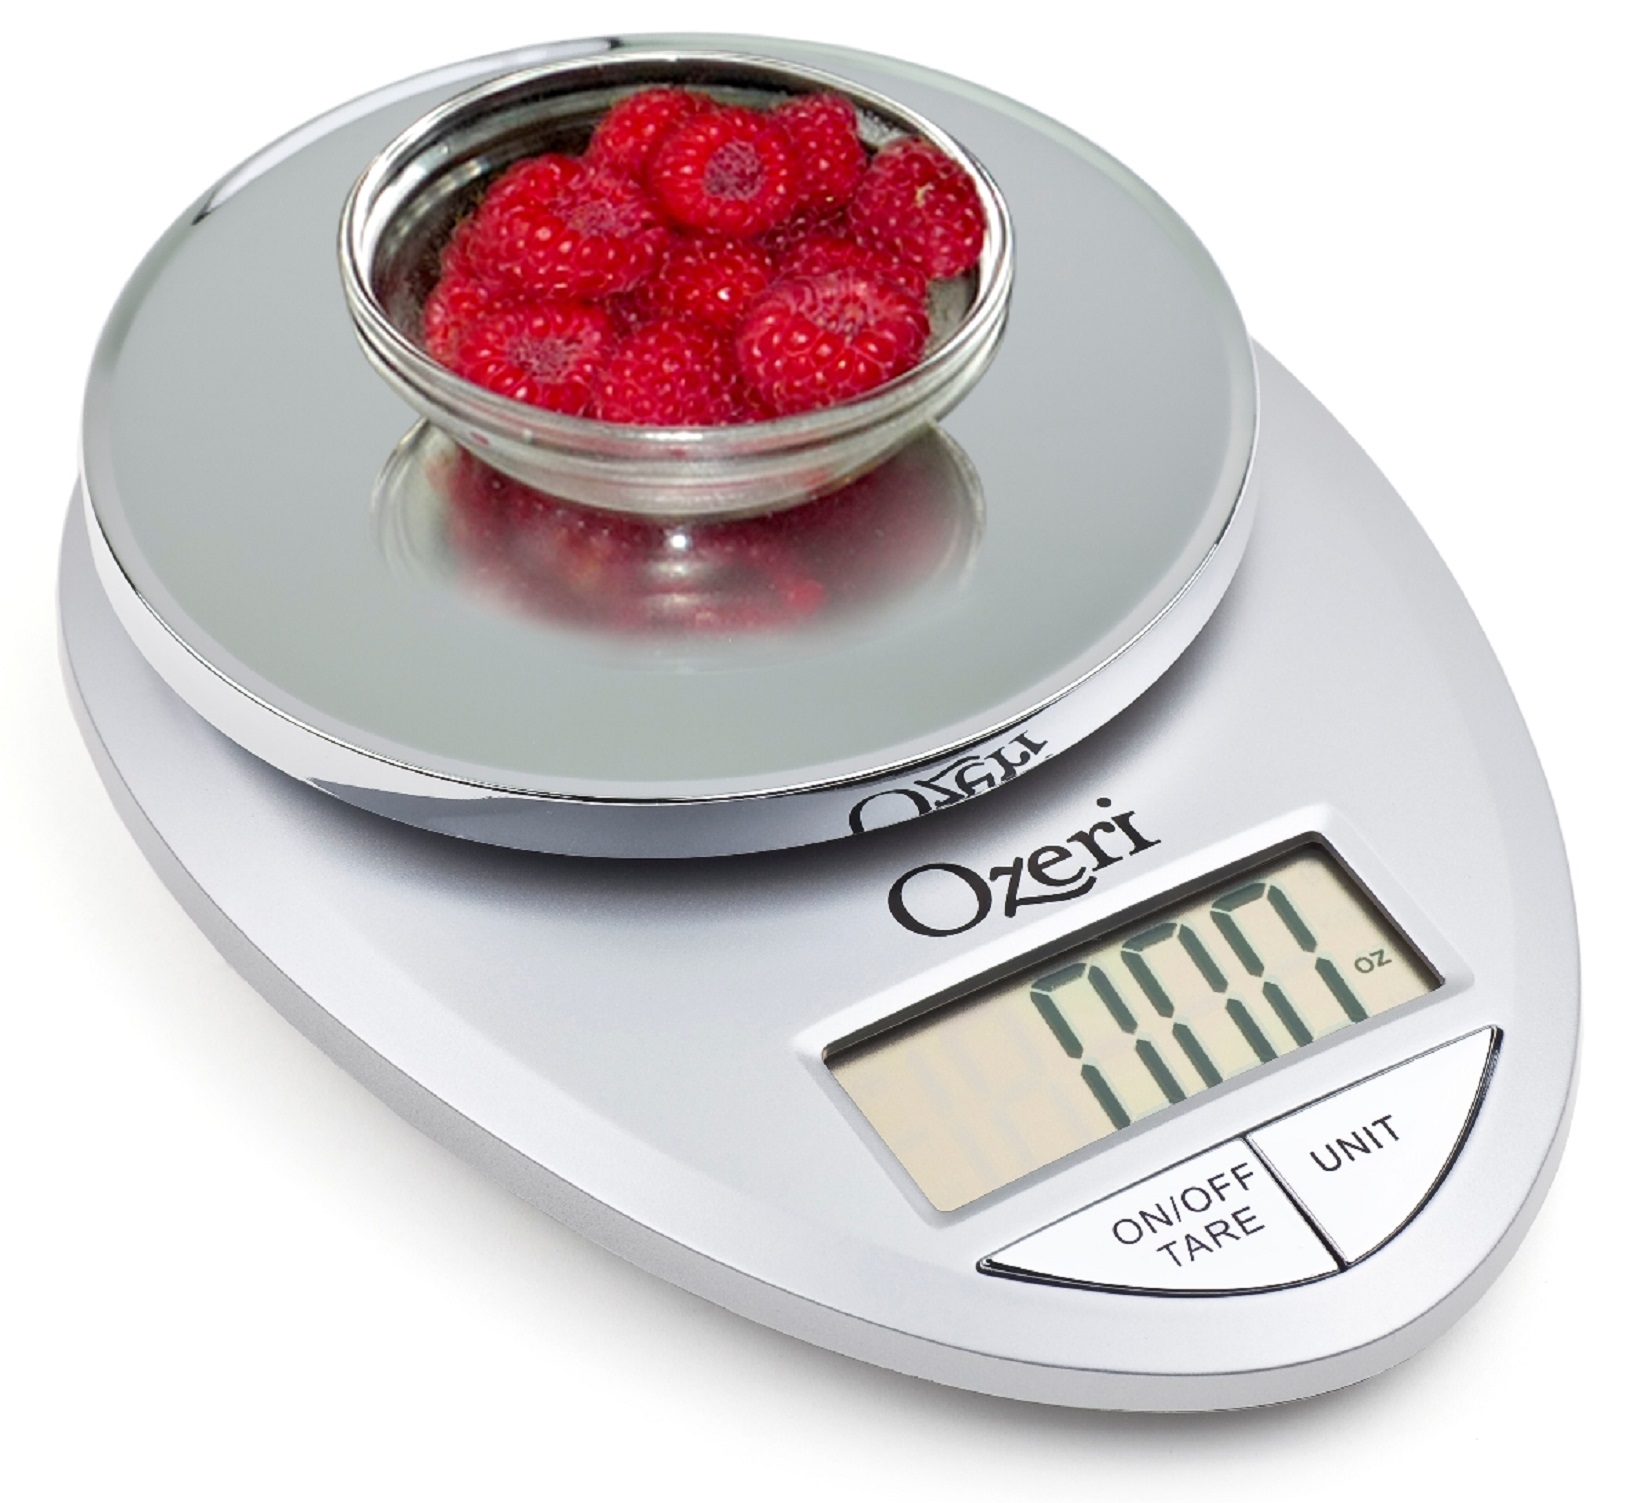 Ozeri Pro Digital Kitchen Food Scale, 0.05 oz to 12 lbs (1 gram to 5.4 kg) - image 4 of 8